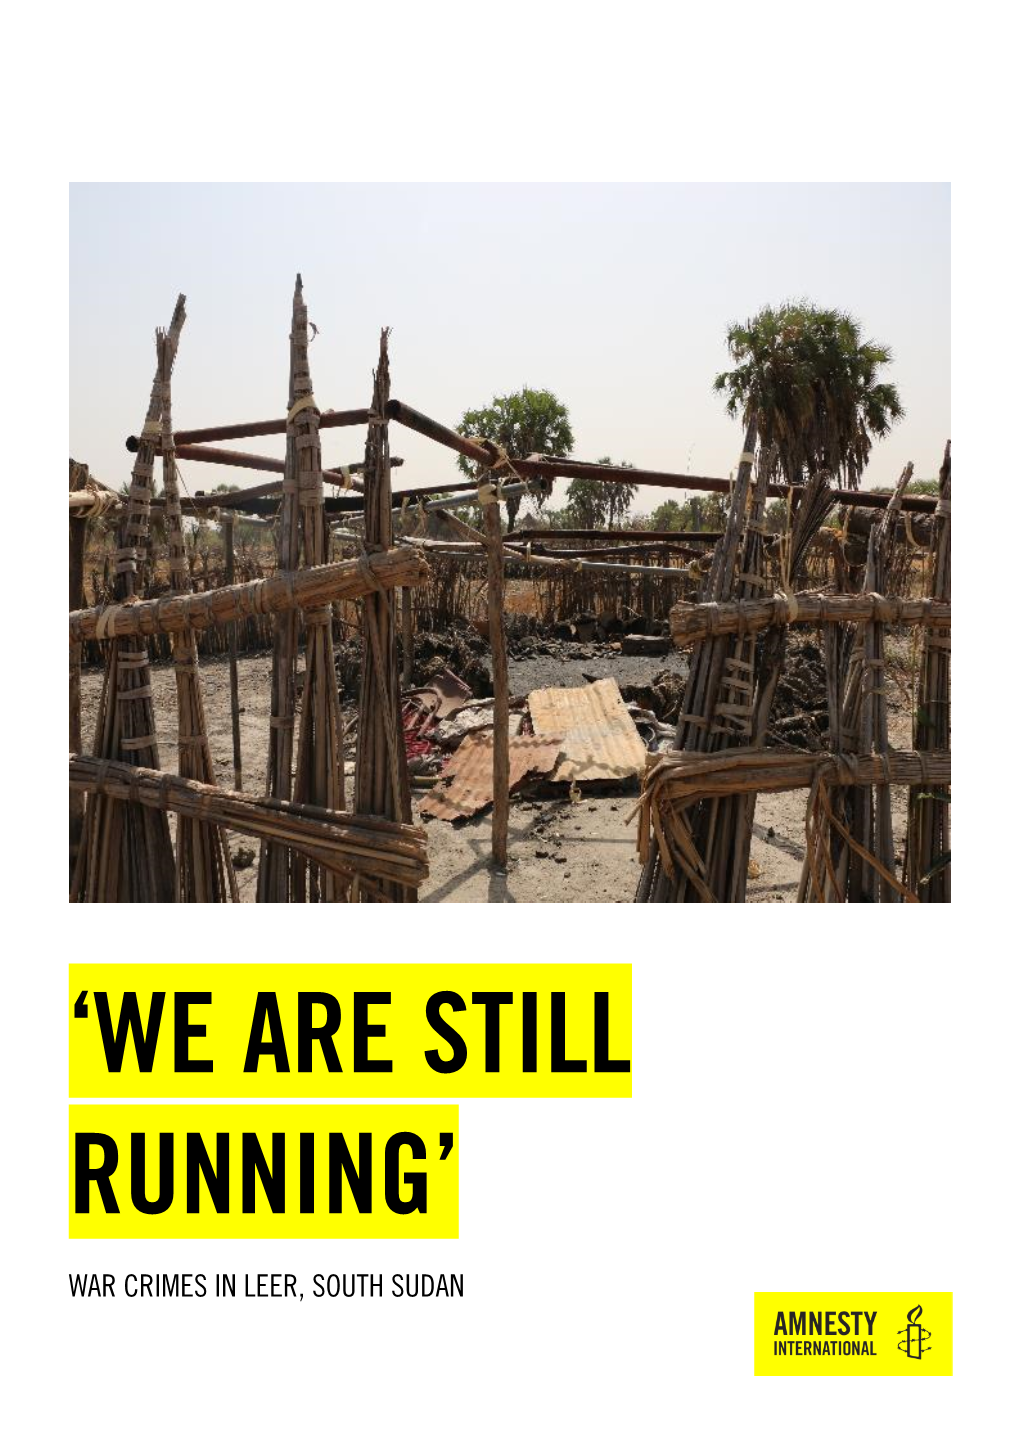 South Sudan: 'We Are Still Running': War Crimes in Leer County